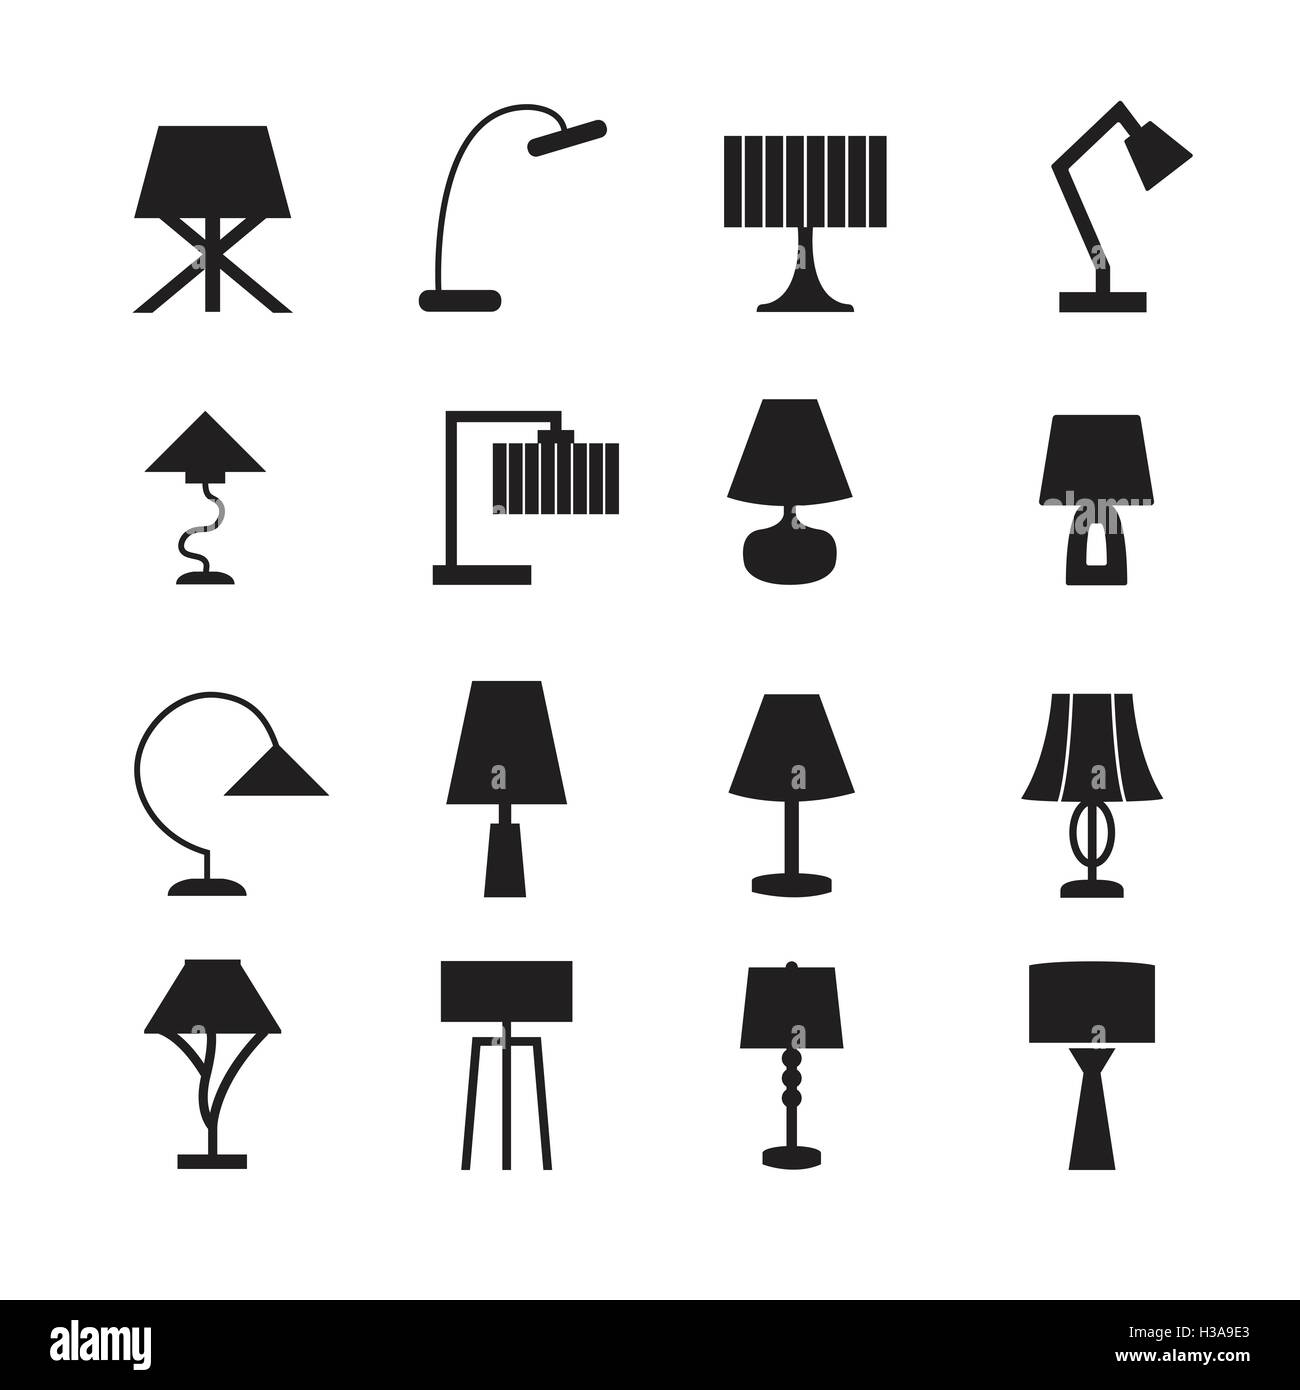 lamp vector,desk lamp, decorate lamp icon set Stock Vector